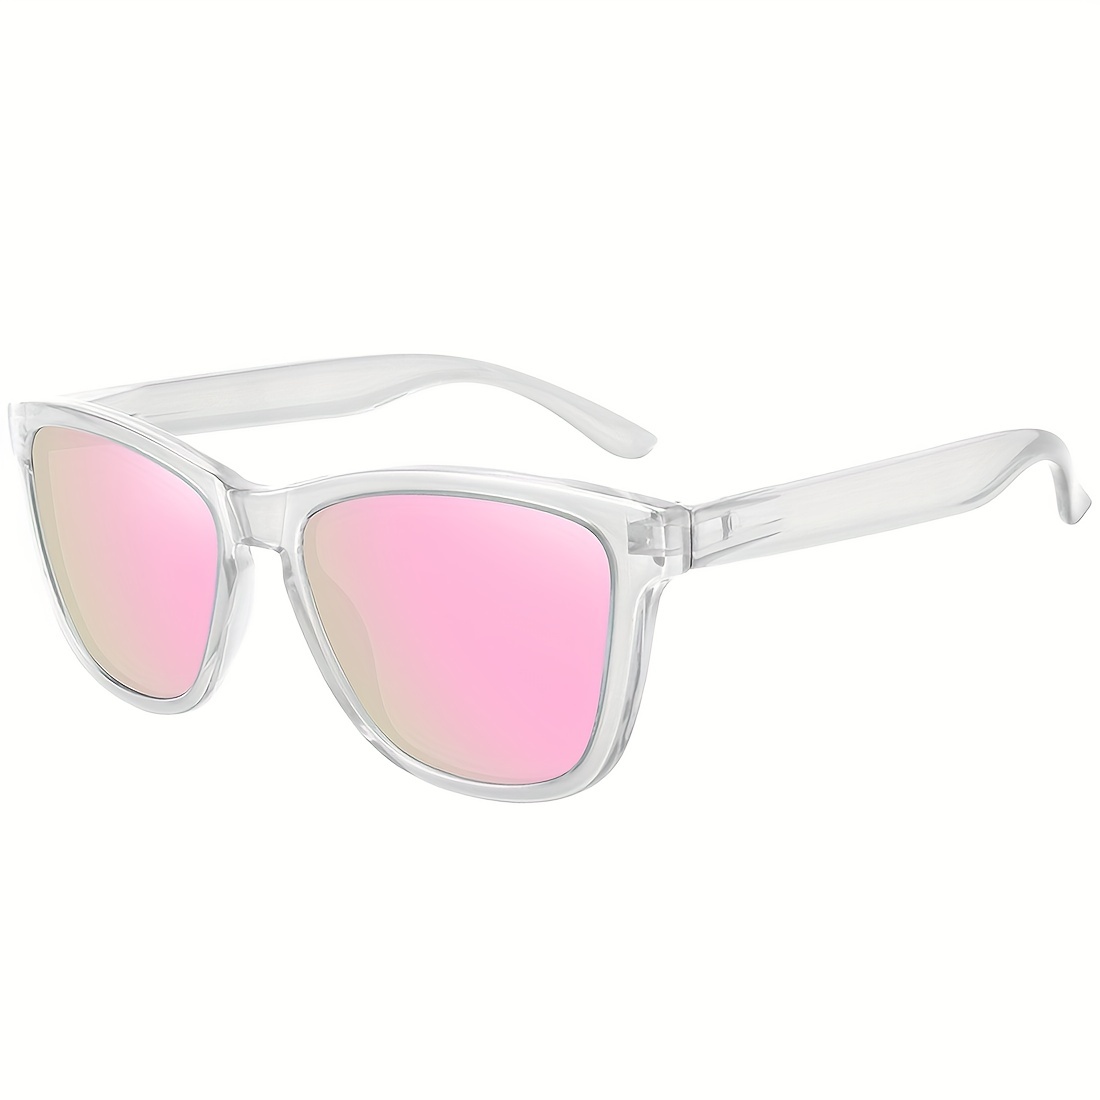 1pc Polarized Sunglasses Mens Trendy Sunglasses Mens Driving